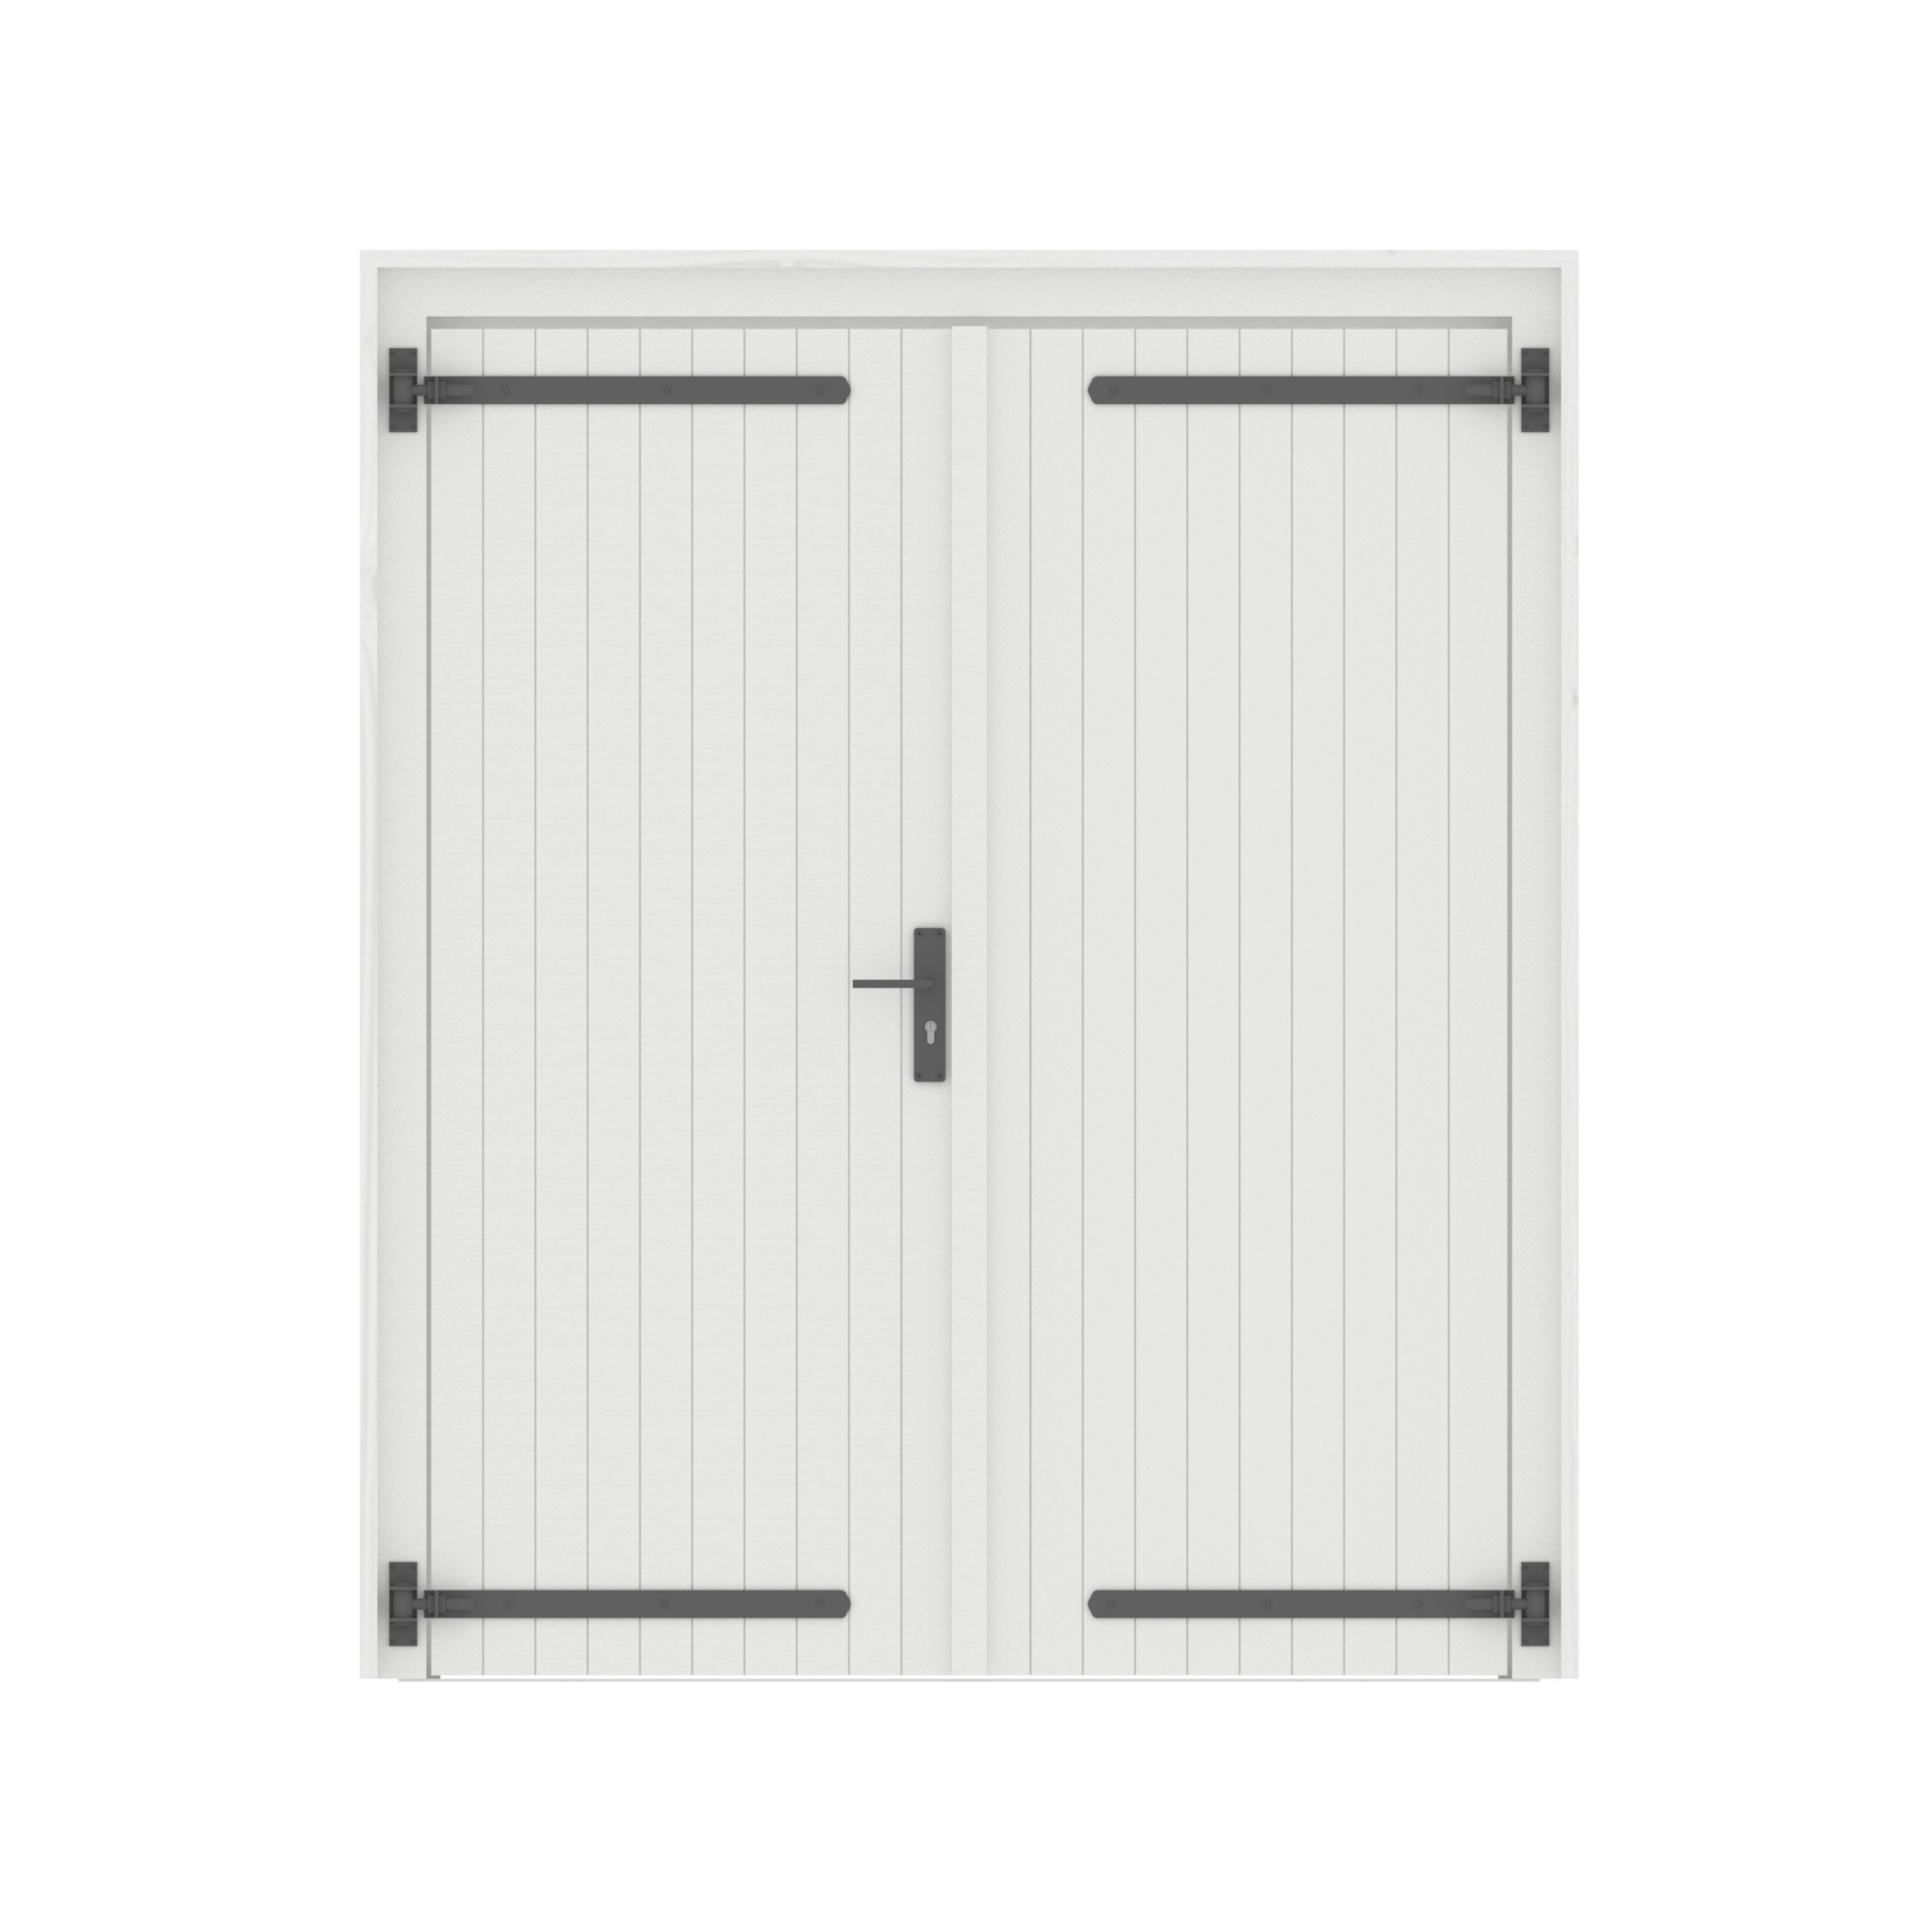 Dubbele deur dicht, 190 x 202 cm, wit gespoten